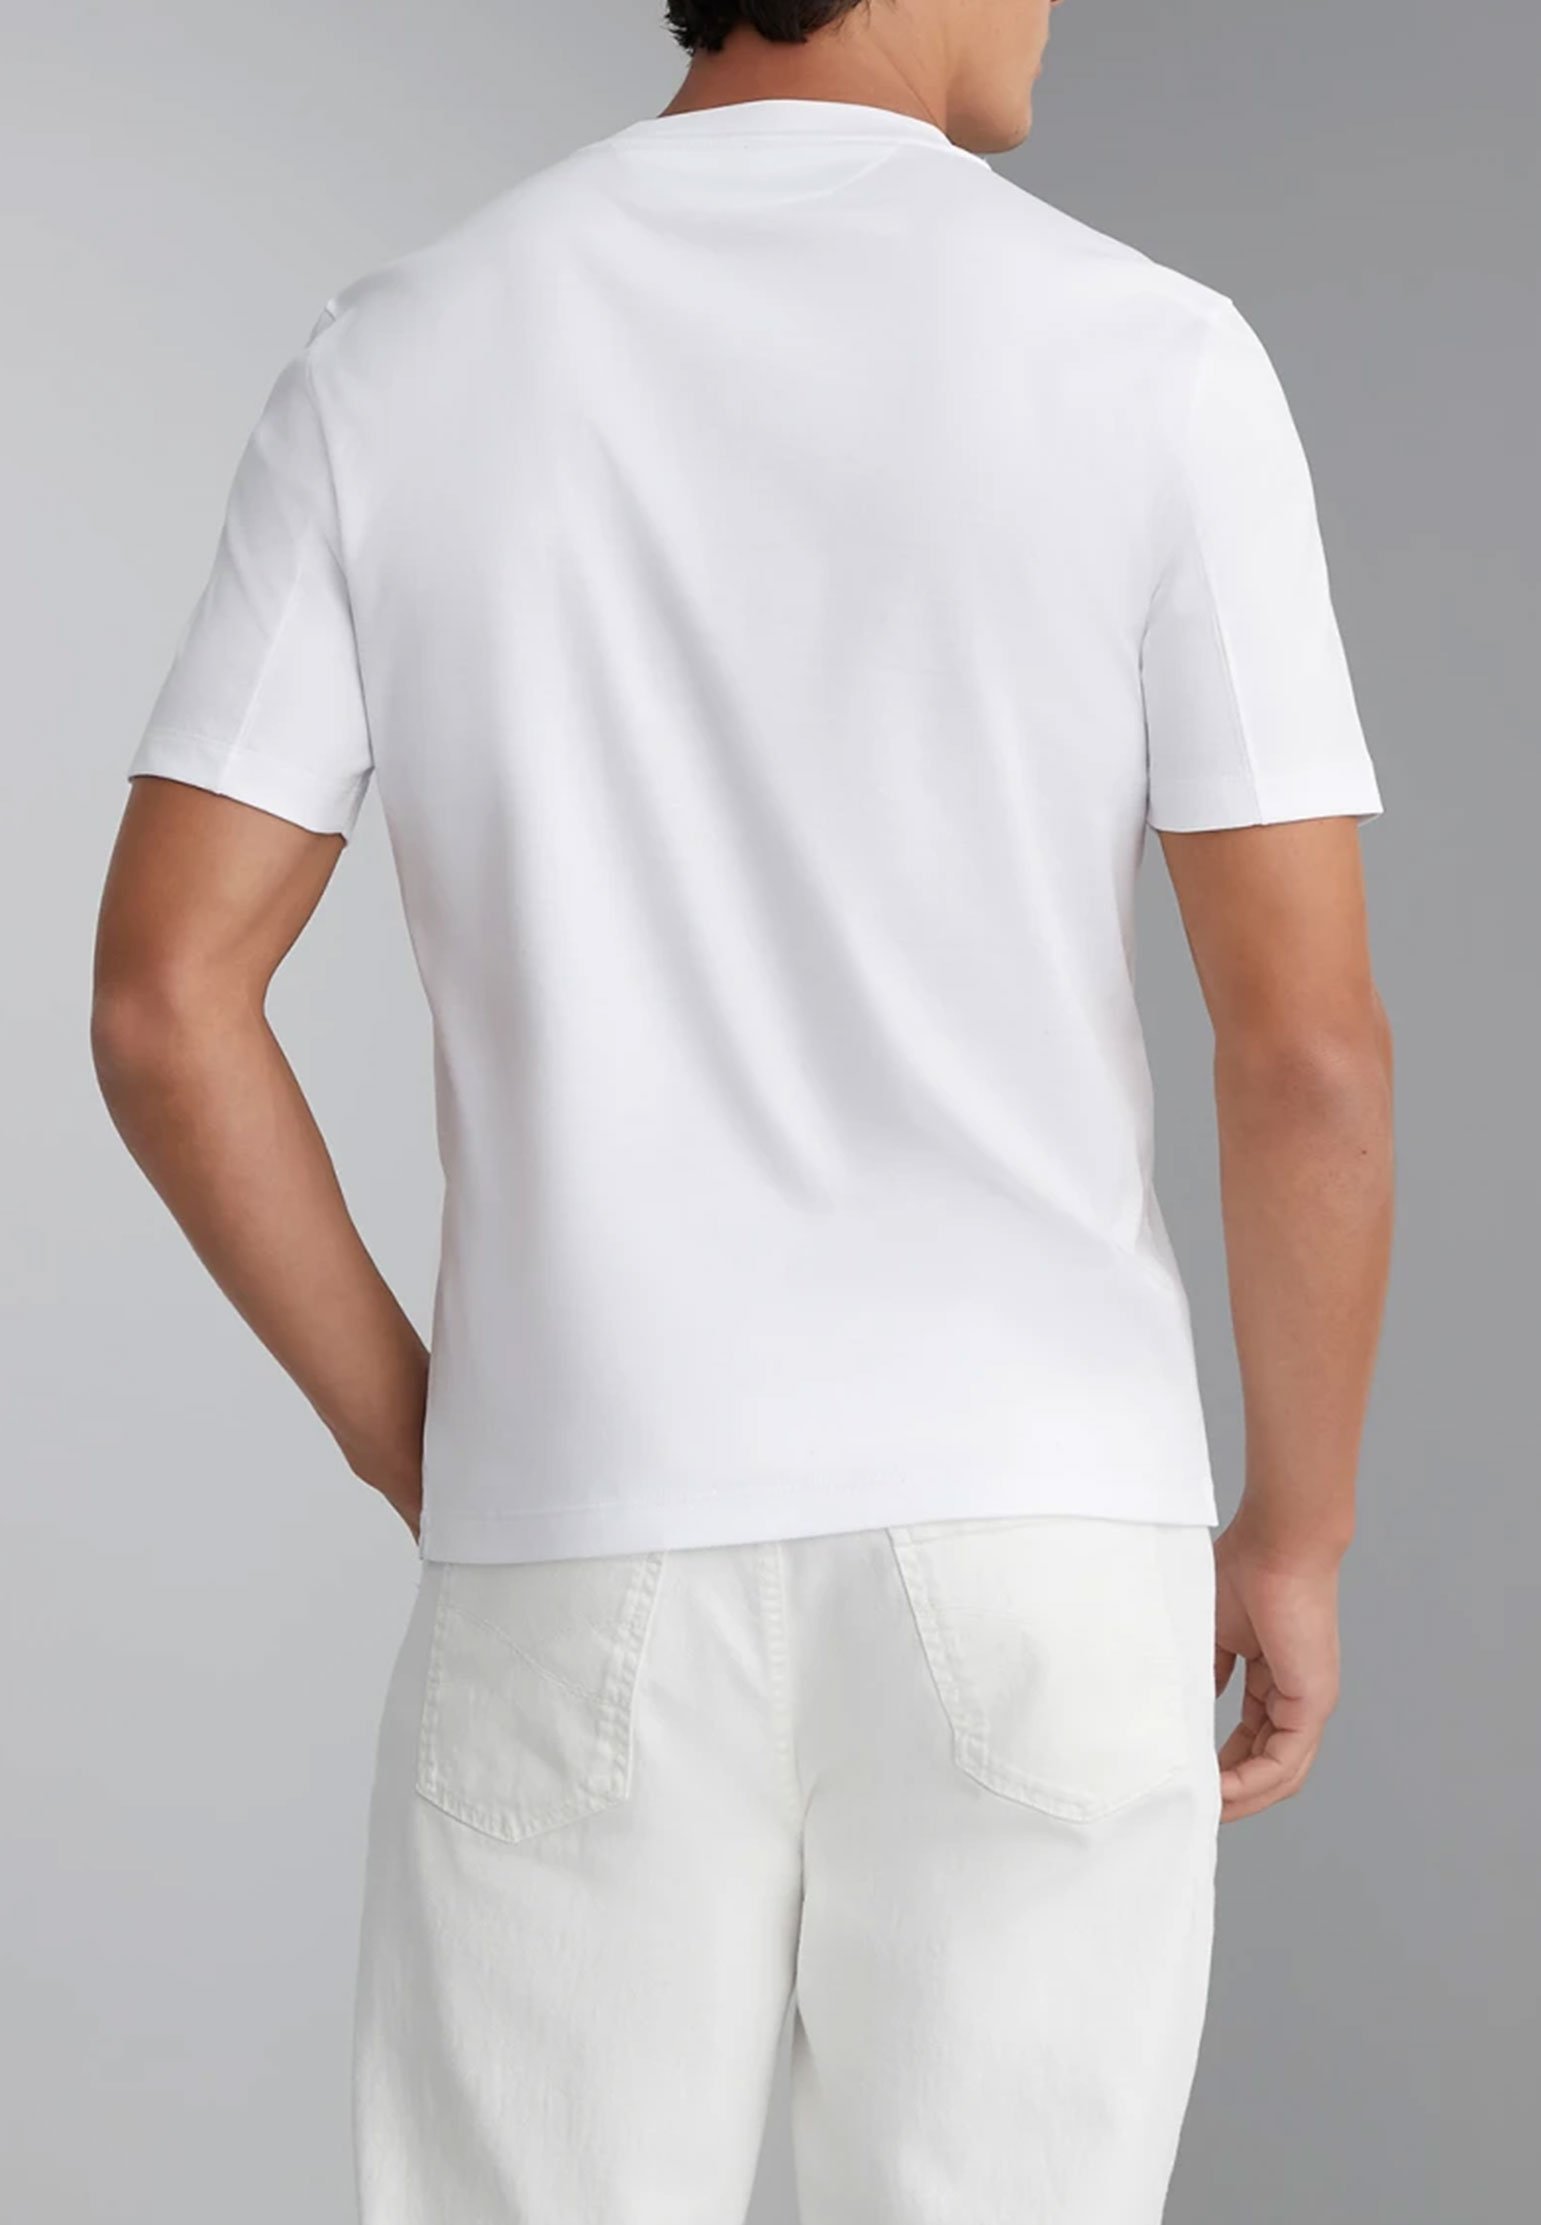 T-Shirt BRUNELLO CUCINELLI Color: white (Code: 3472) in online store Allure